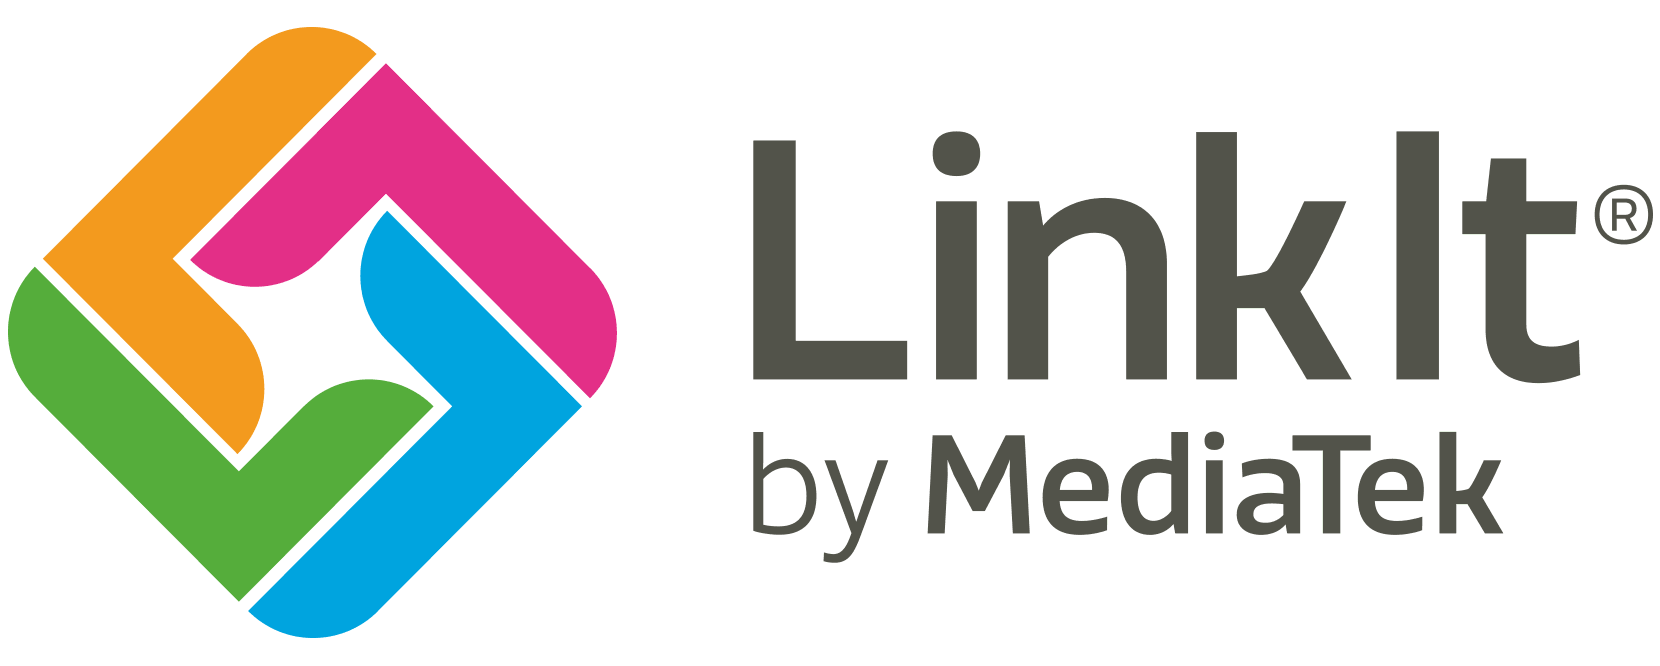 MediaTek Logo - MediaTek Linkit logo | IT Eco Map & News Navigator